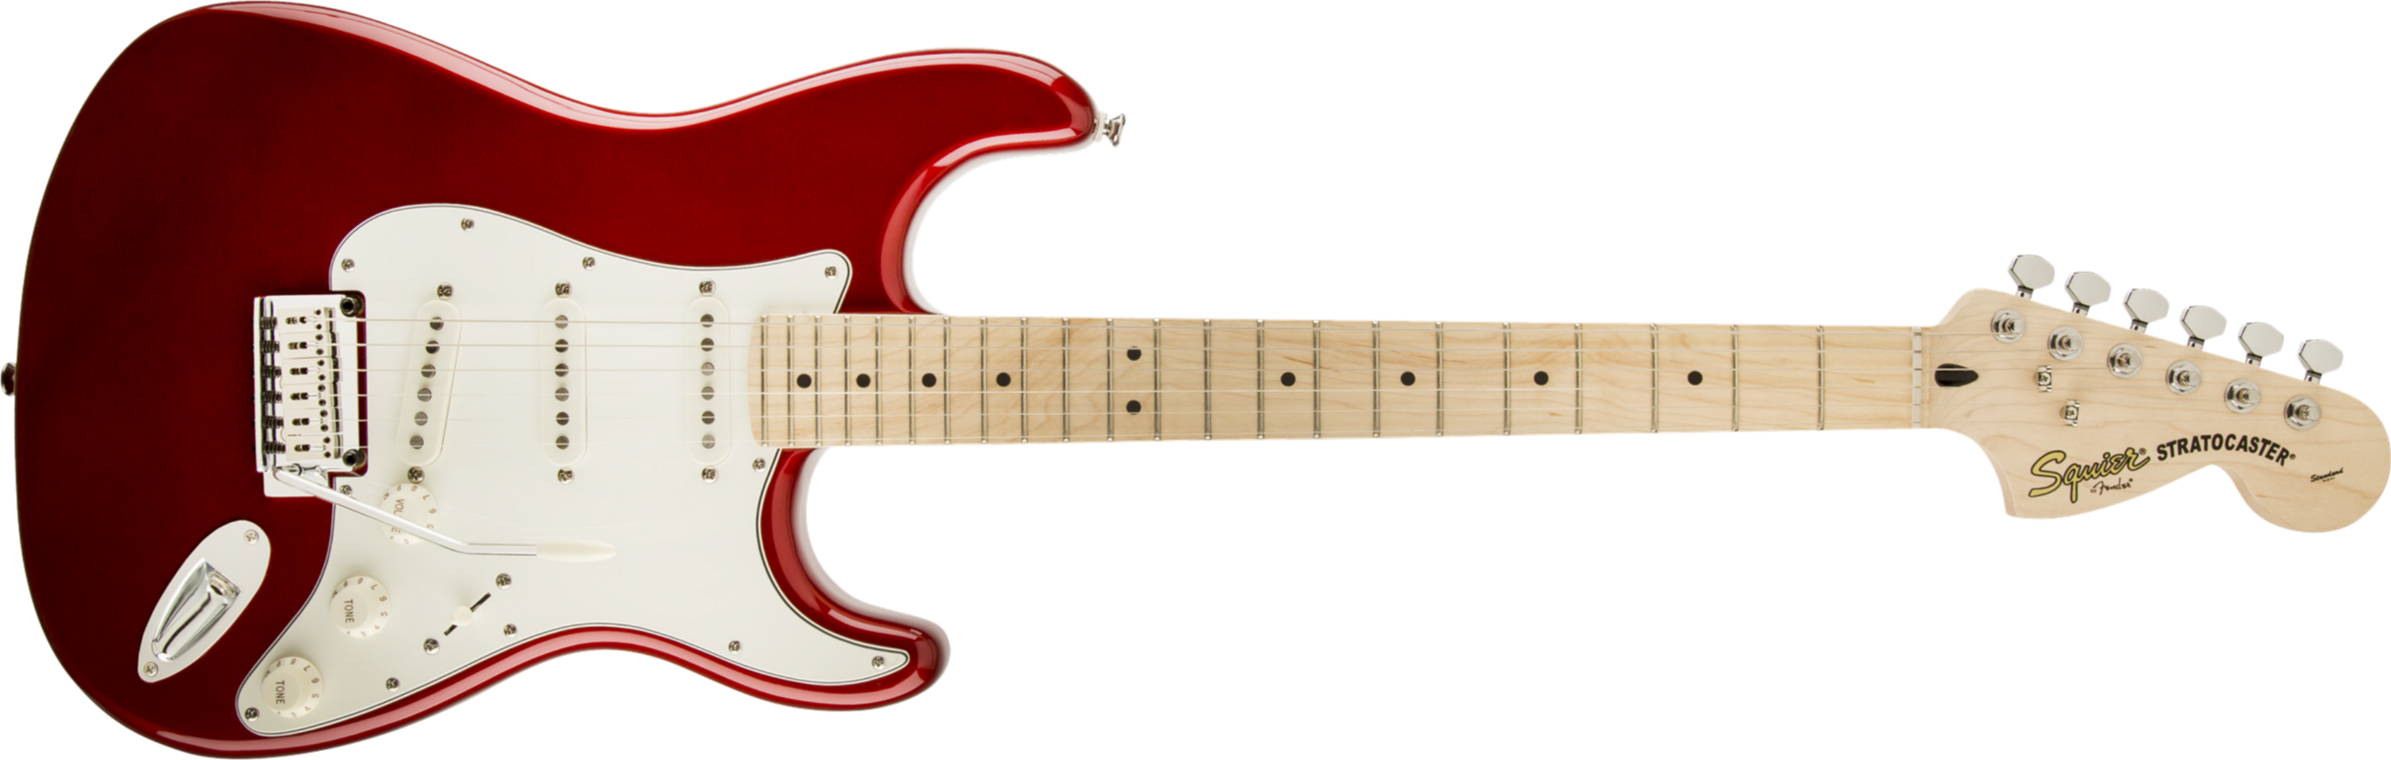 Squier Strat Standard Mn - Candy Apple Red - Guitarra eléctrica con forma de str. - Main picture